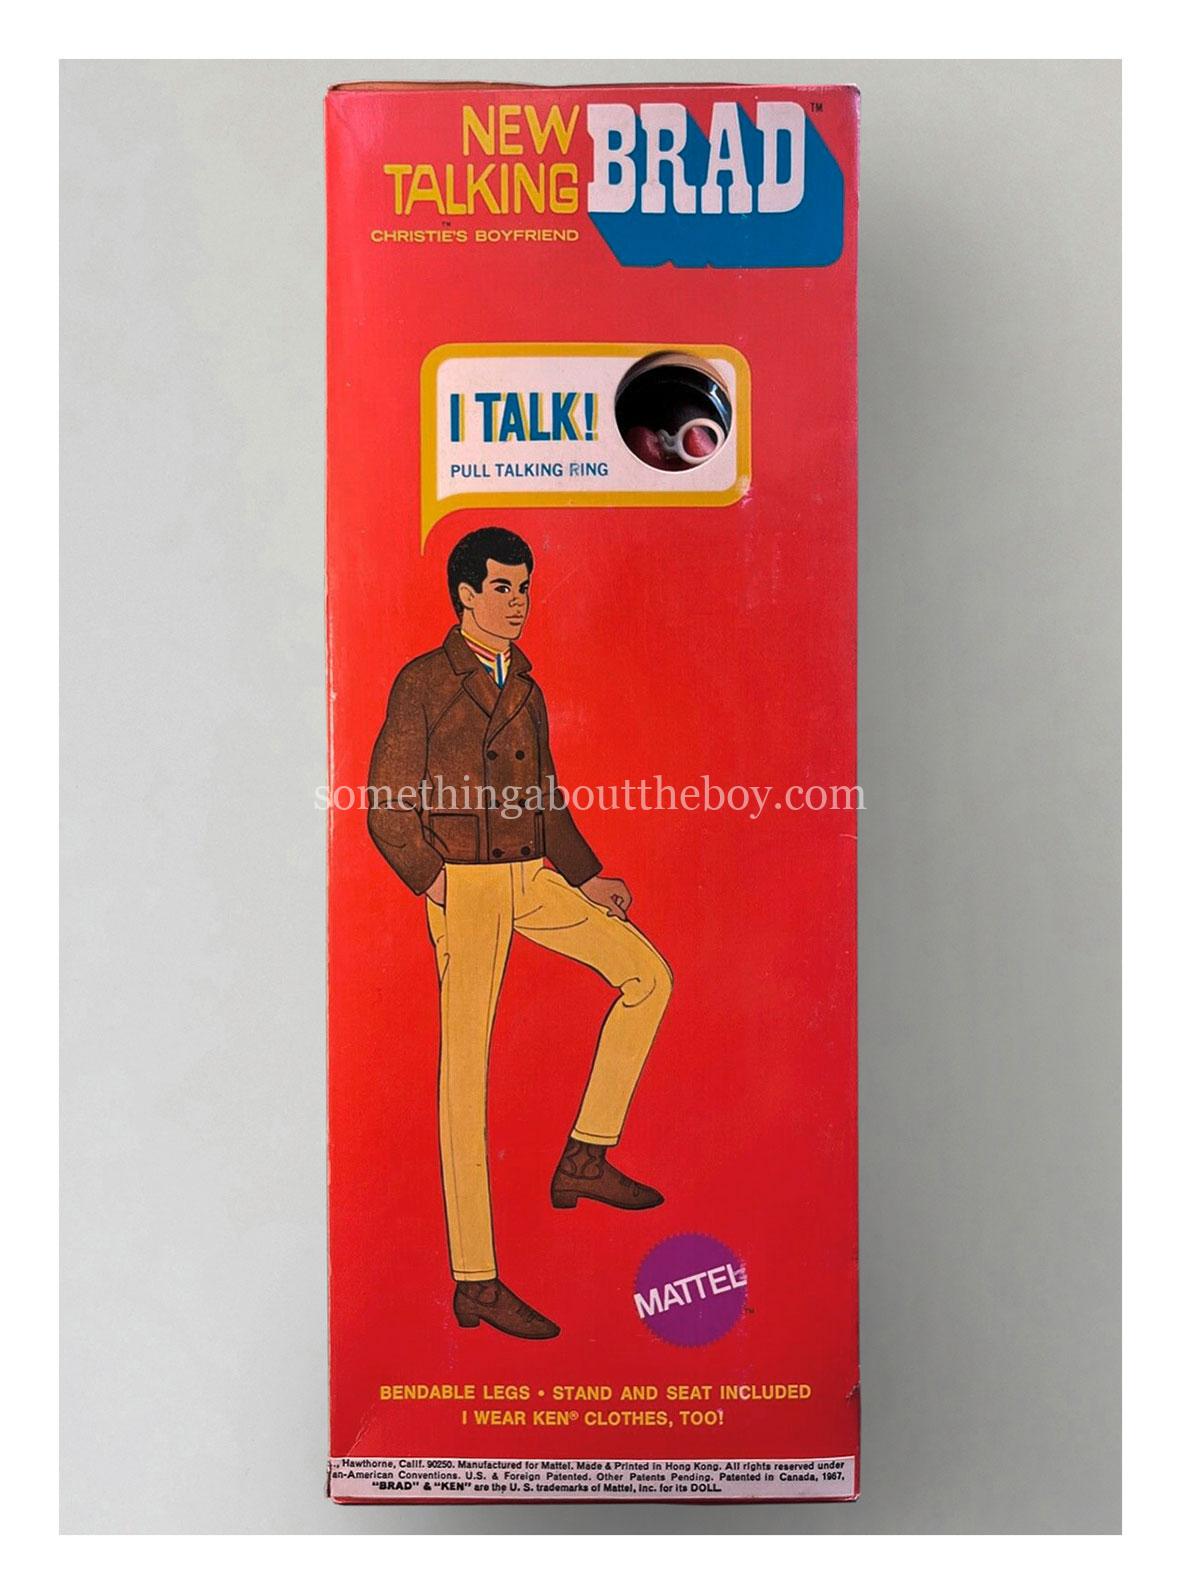 1970-71 #1114 New Talking Brad original packaging